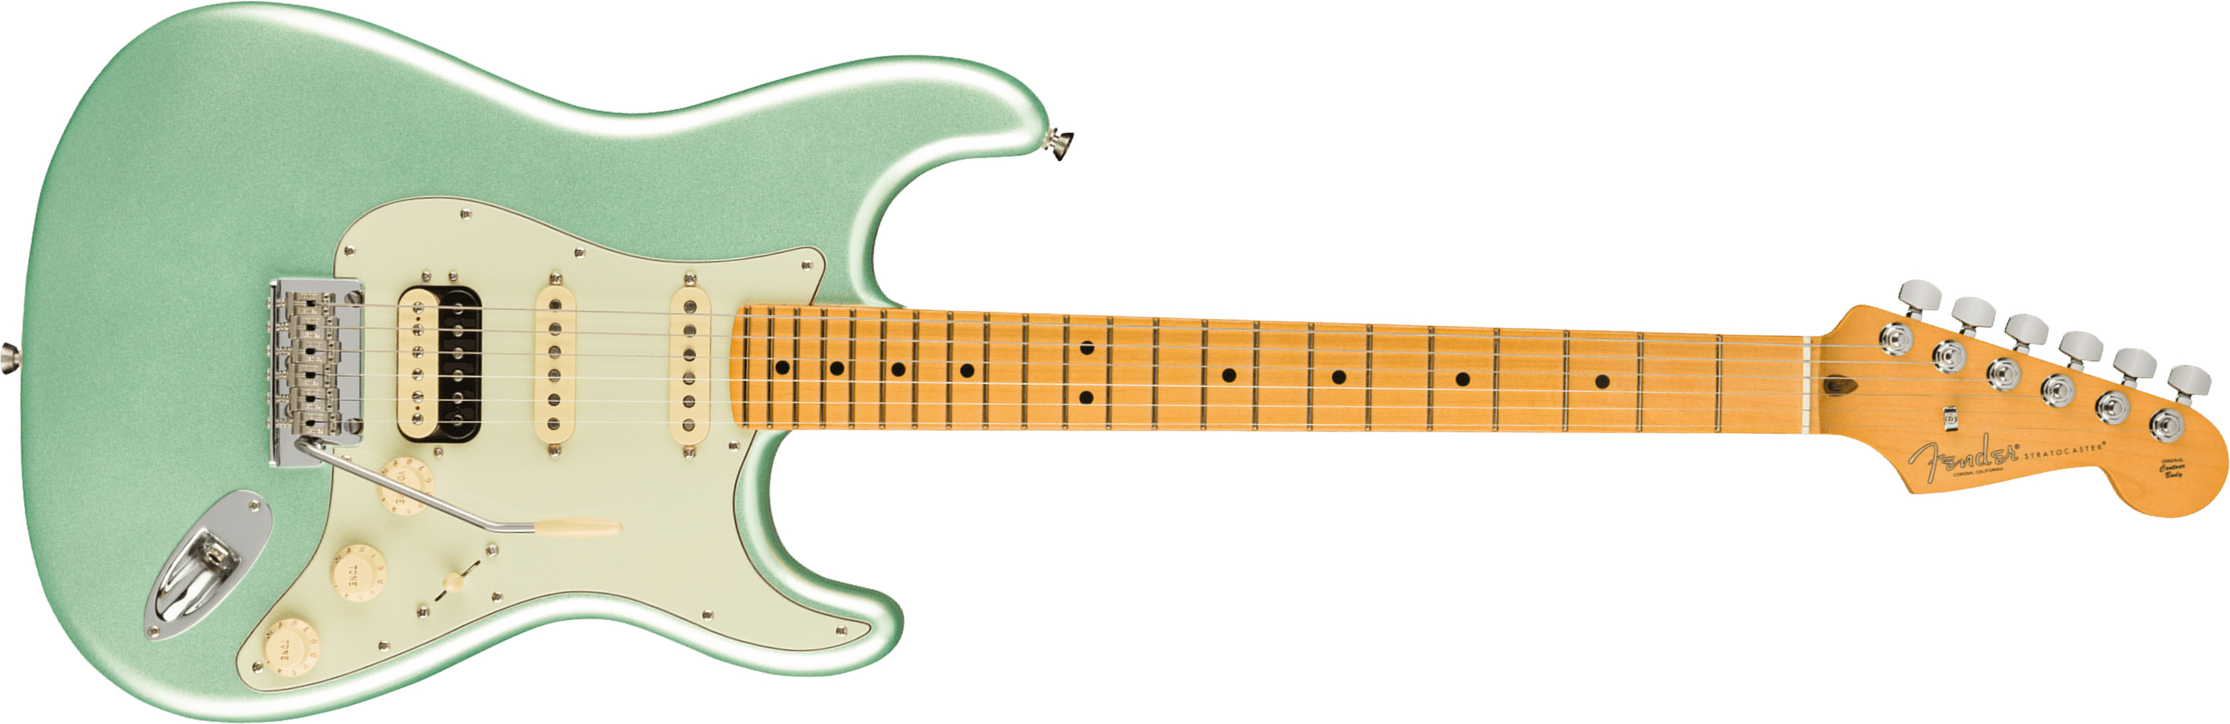 Fender Strat American Professional Ii Hss Usa Mn - Mystic Surf Green - Str shape electric guitar - Main picture